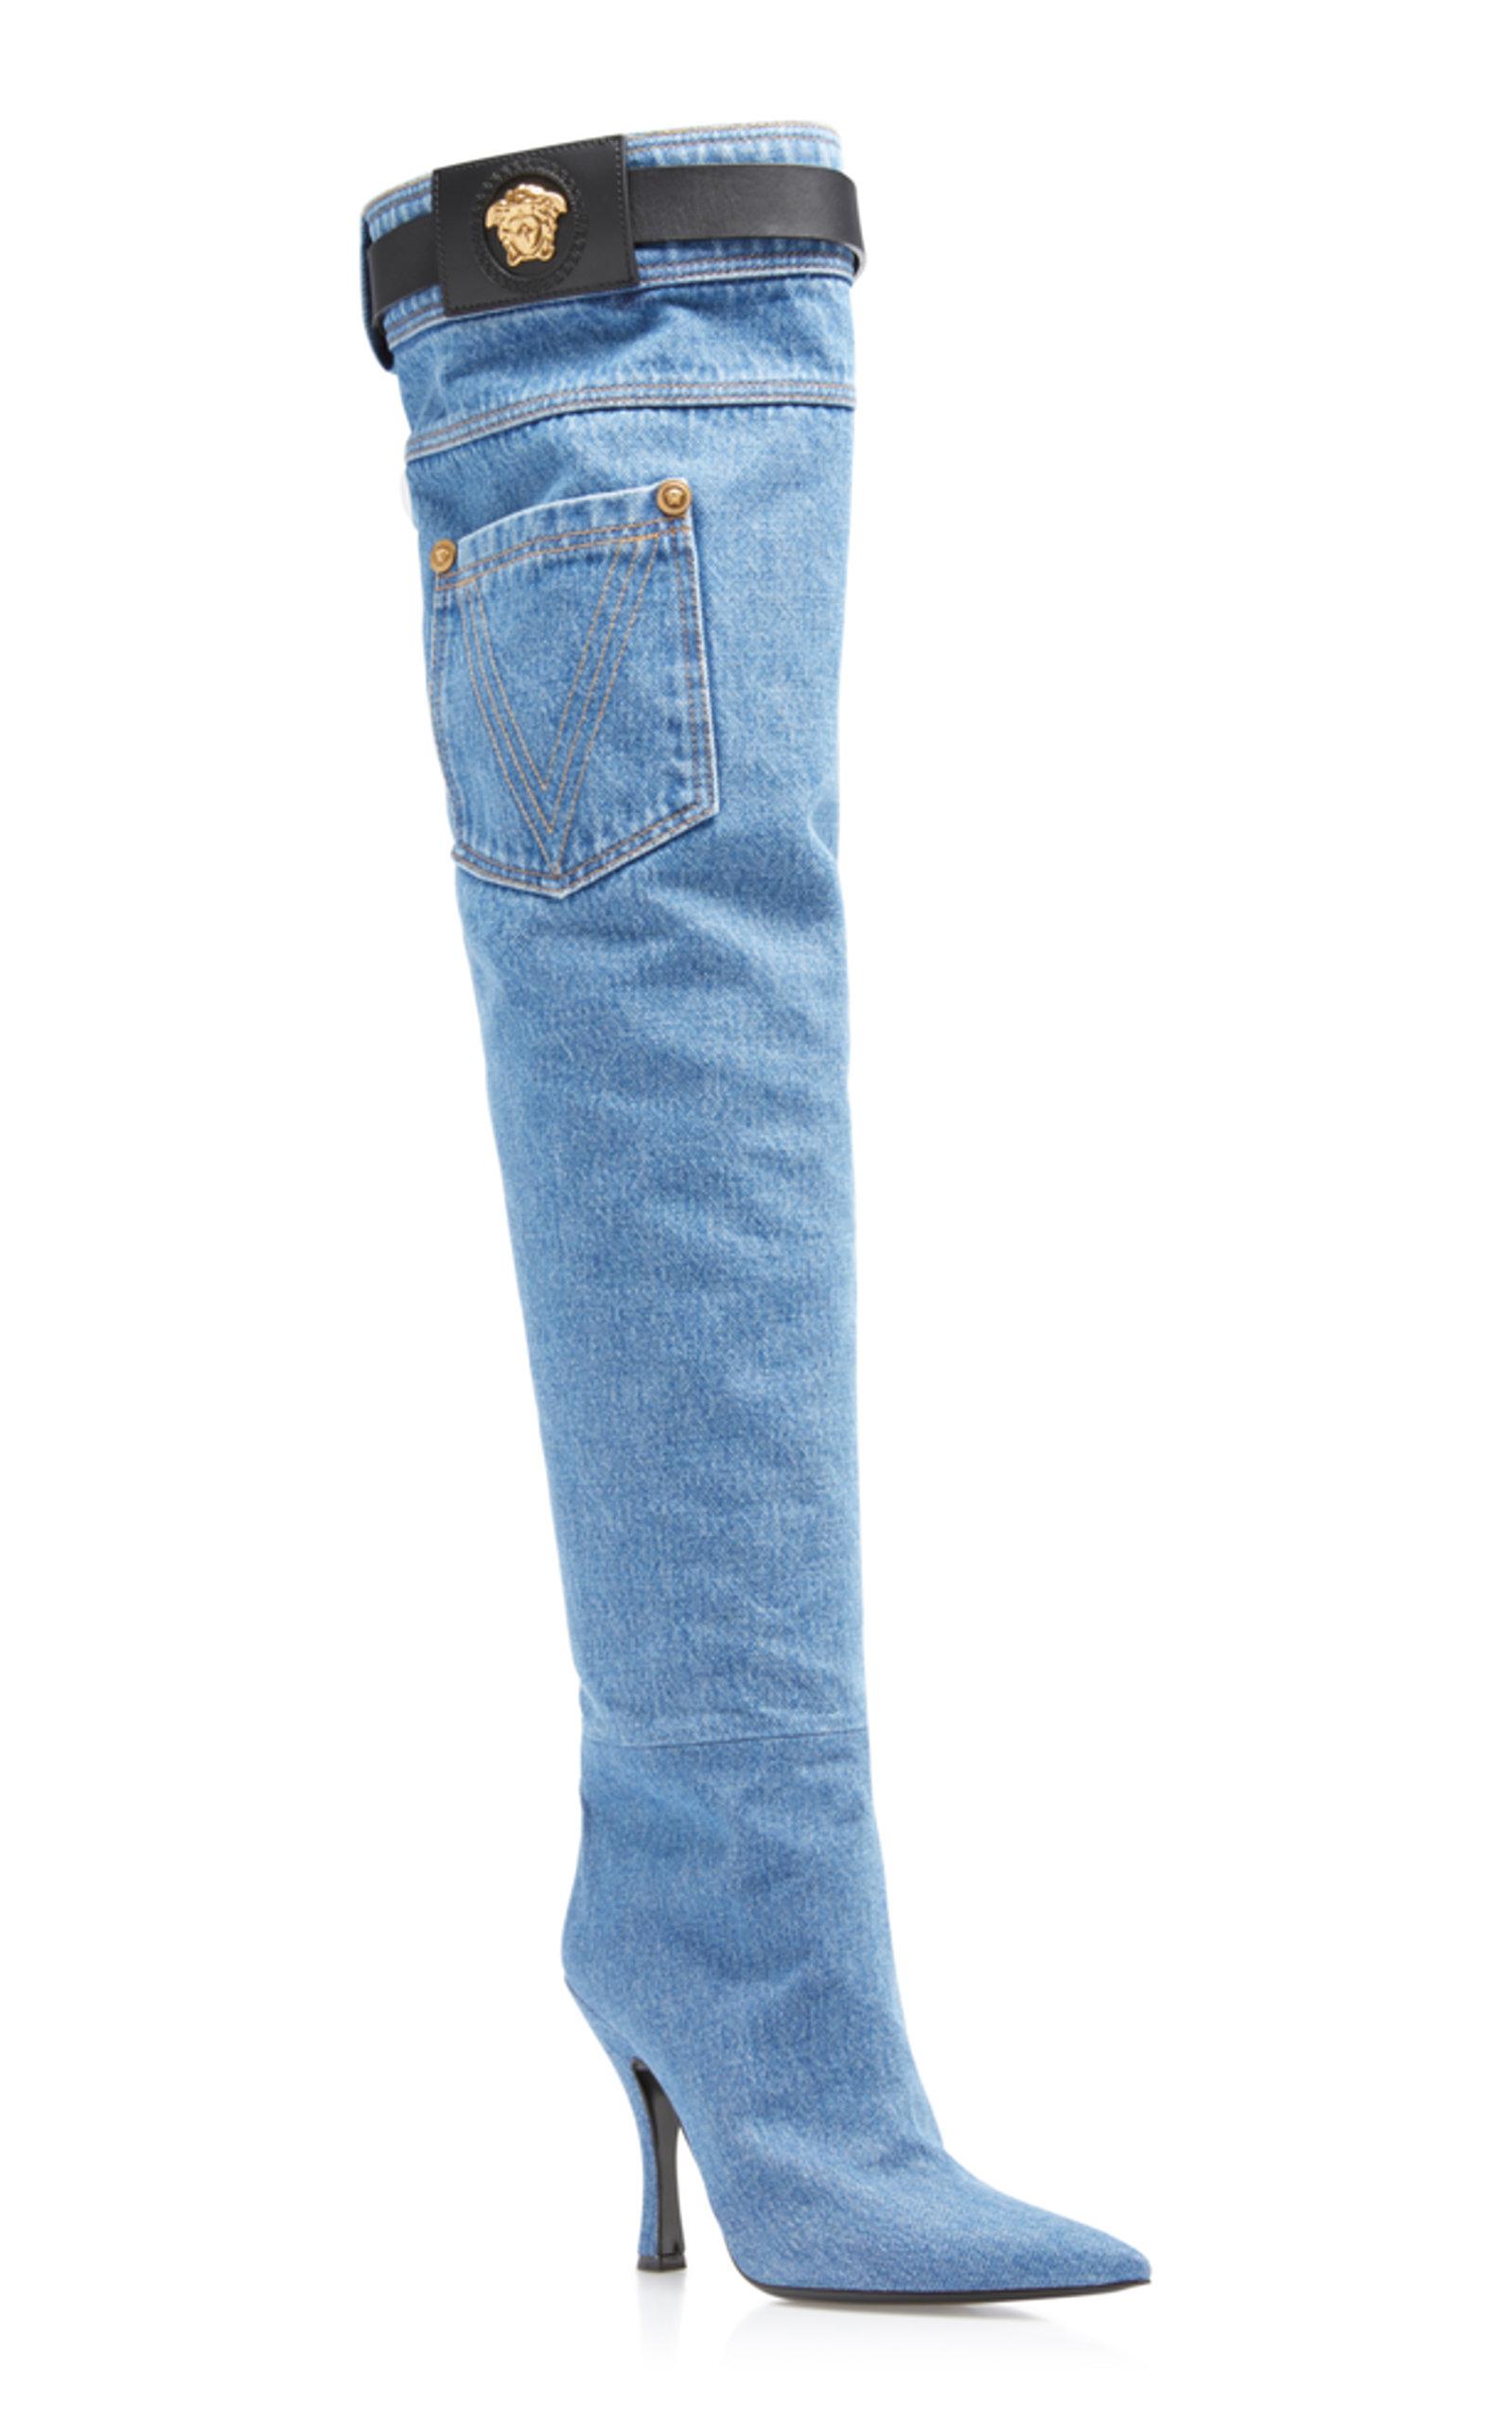 versace jeans stella